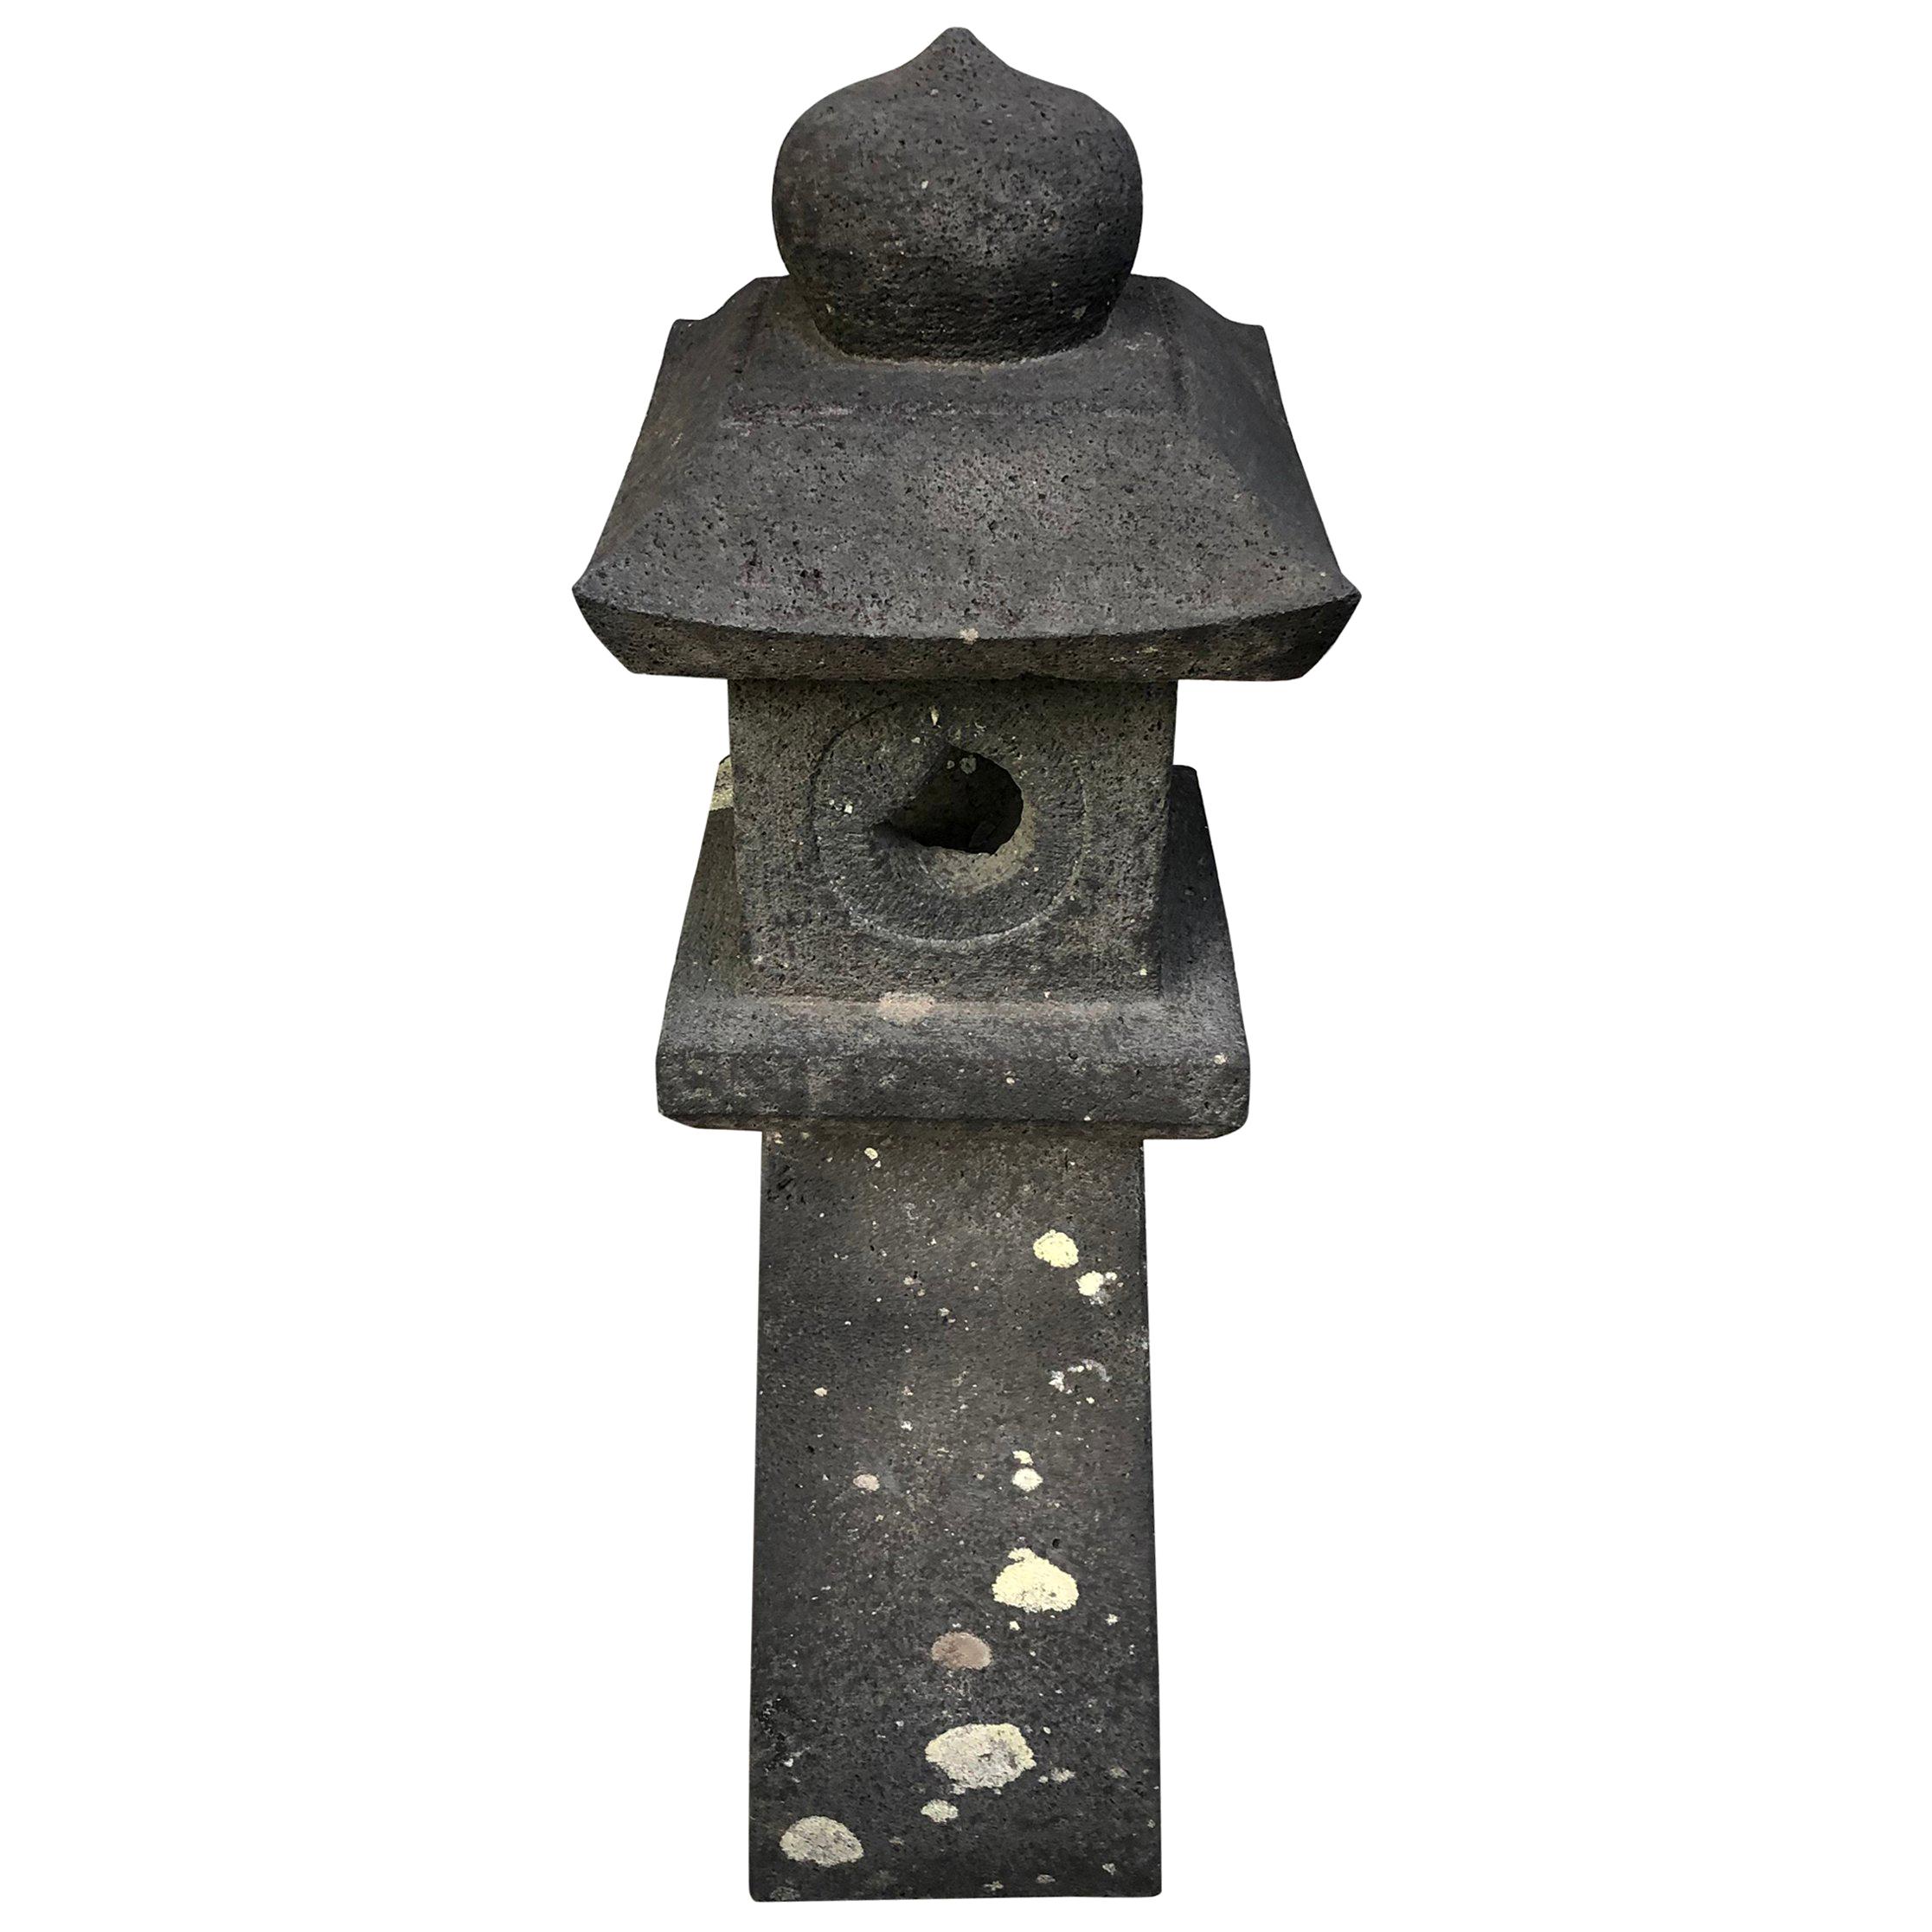 Japanese Tall Black Antique Pathway Stone Lantern, 100 Years Old, 31"